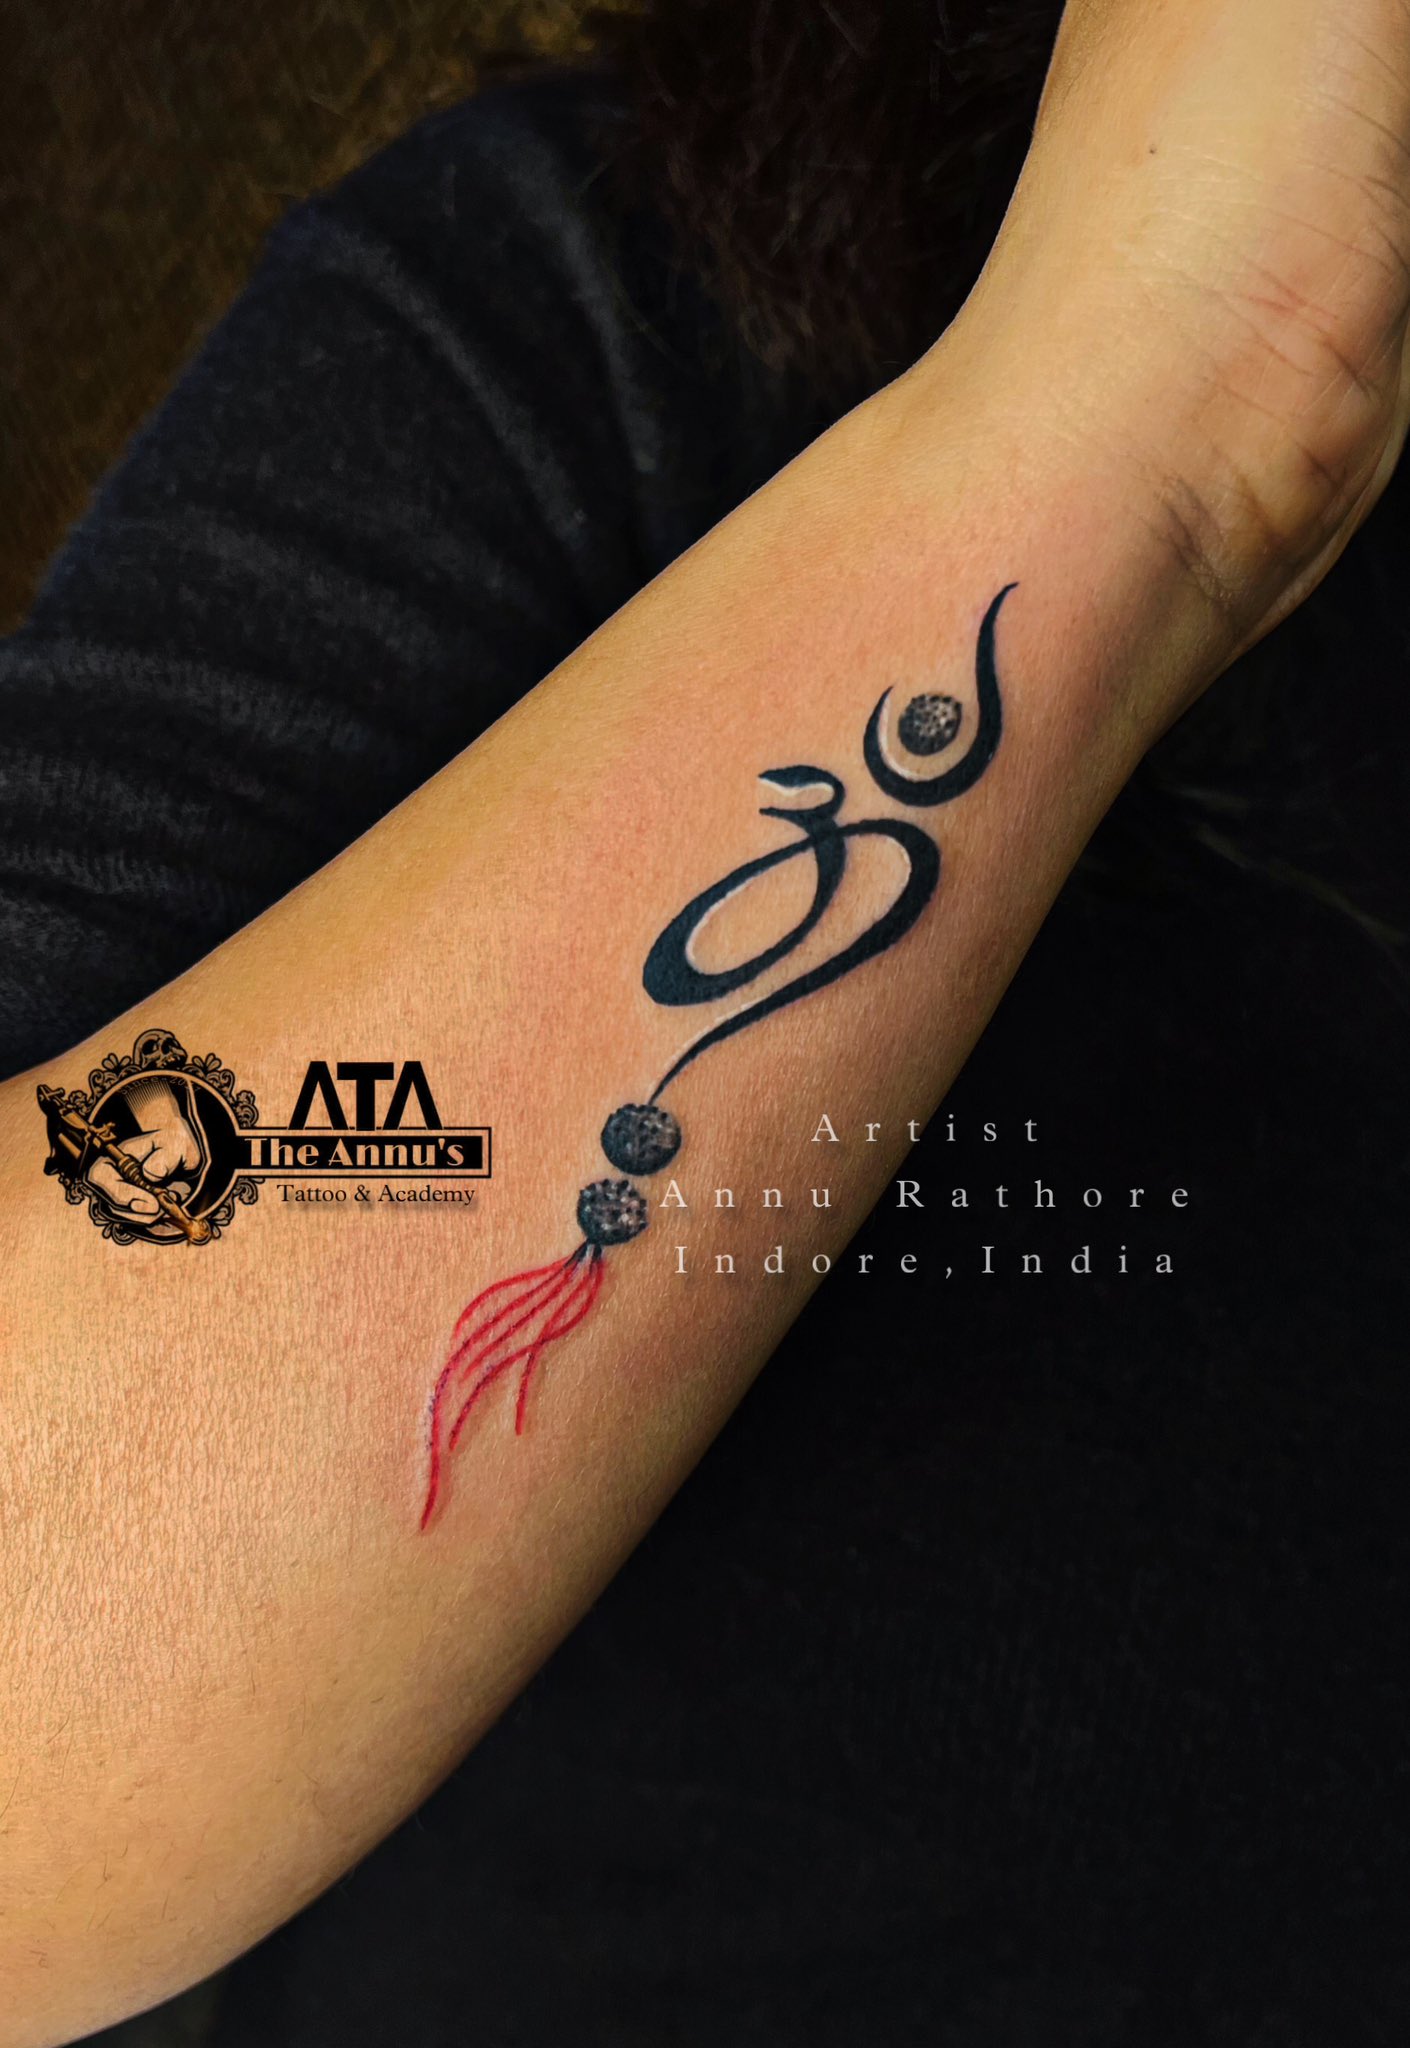 Annu Rathore - female artist - the annu's tattoo & academy | LinkedIn